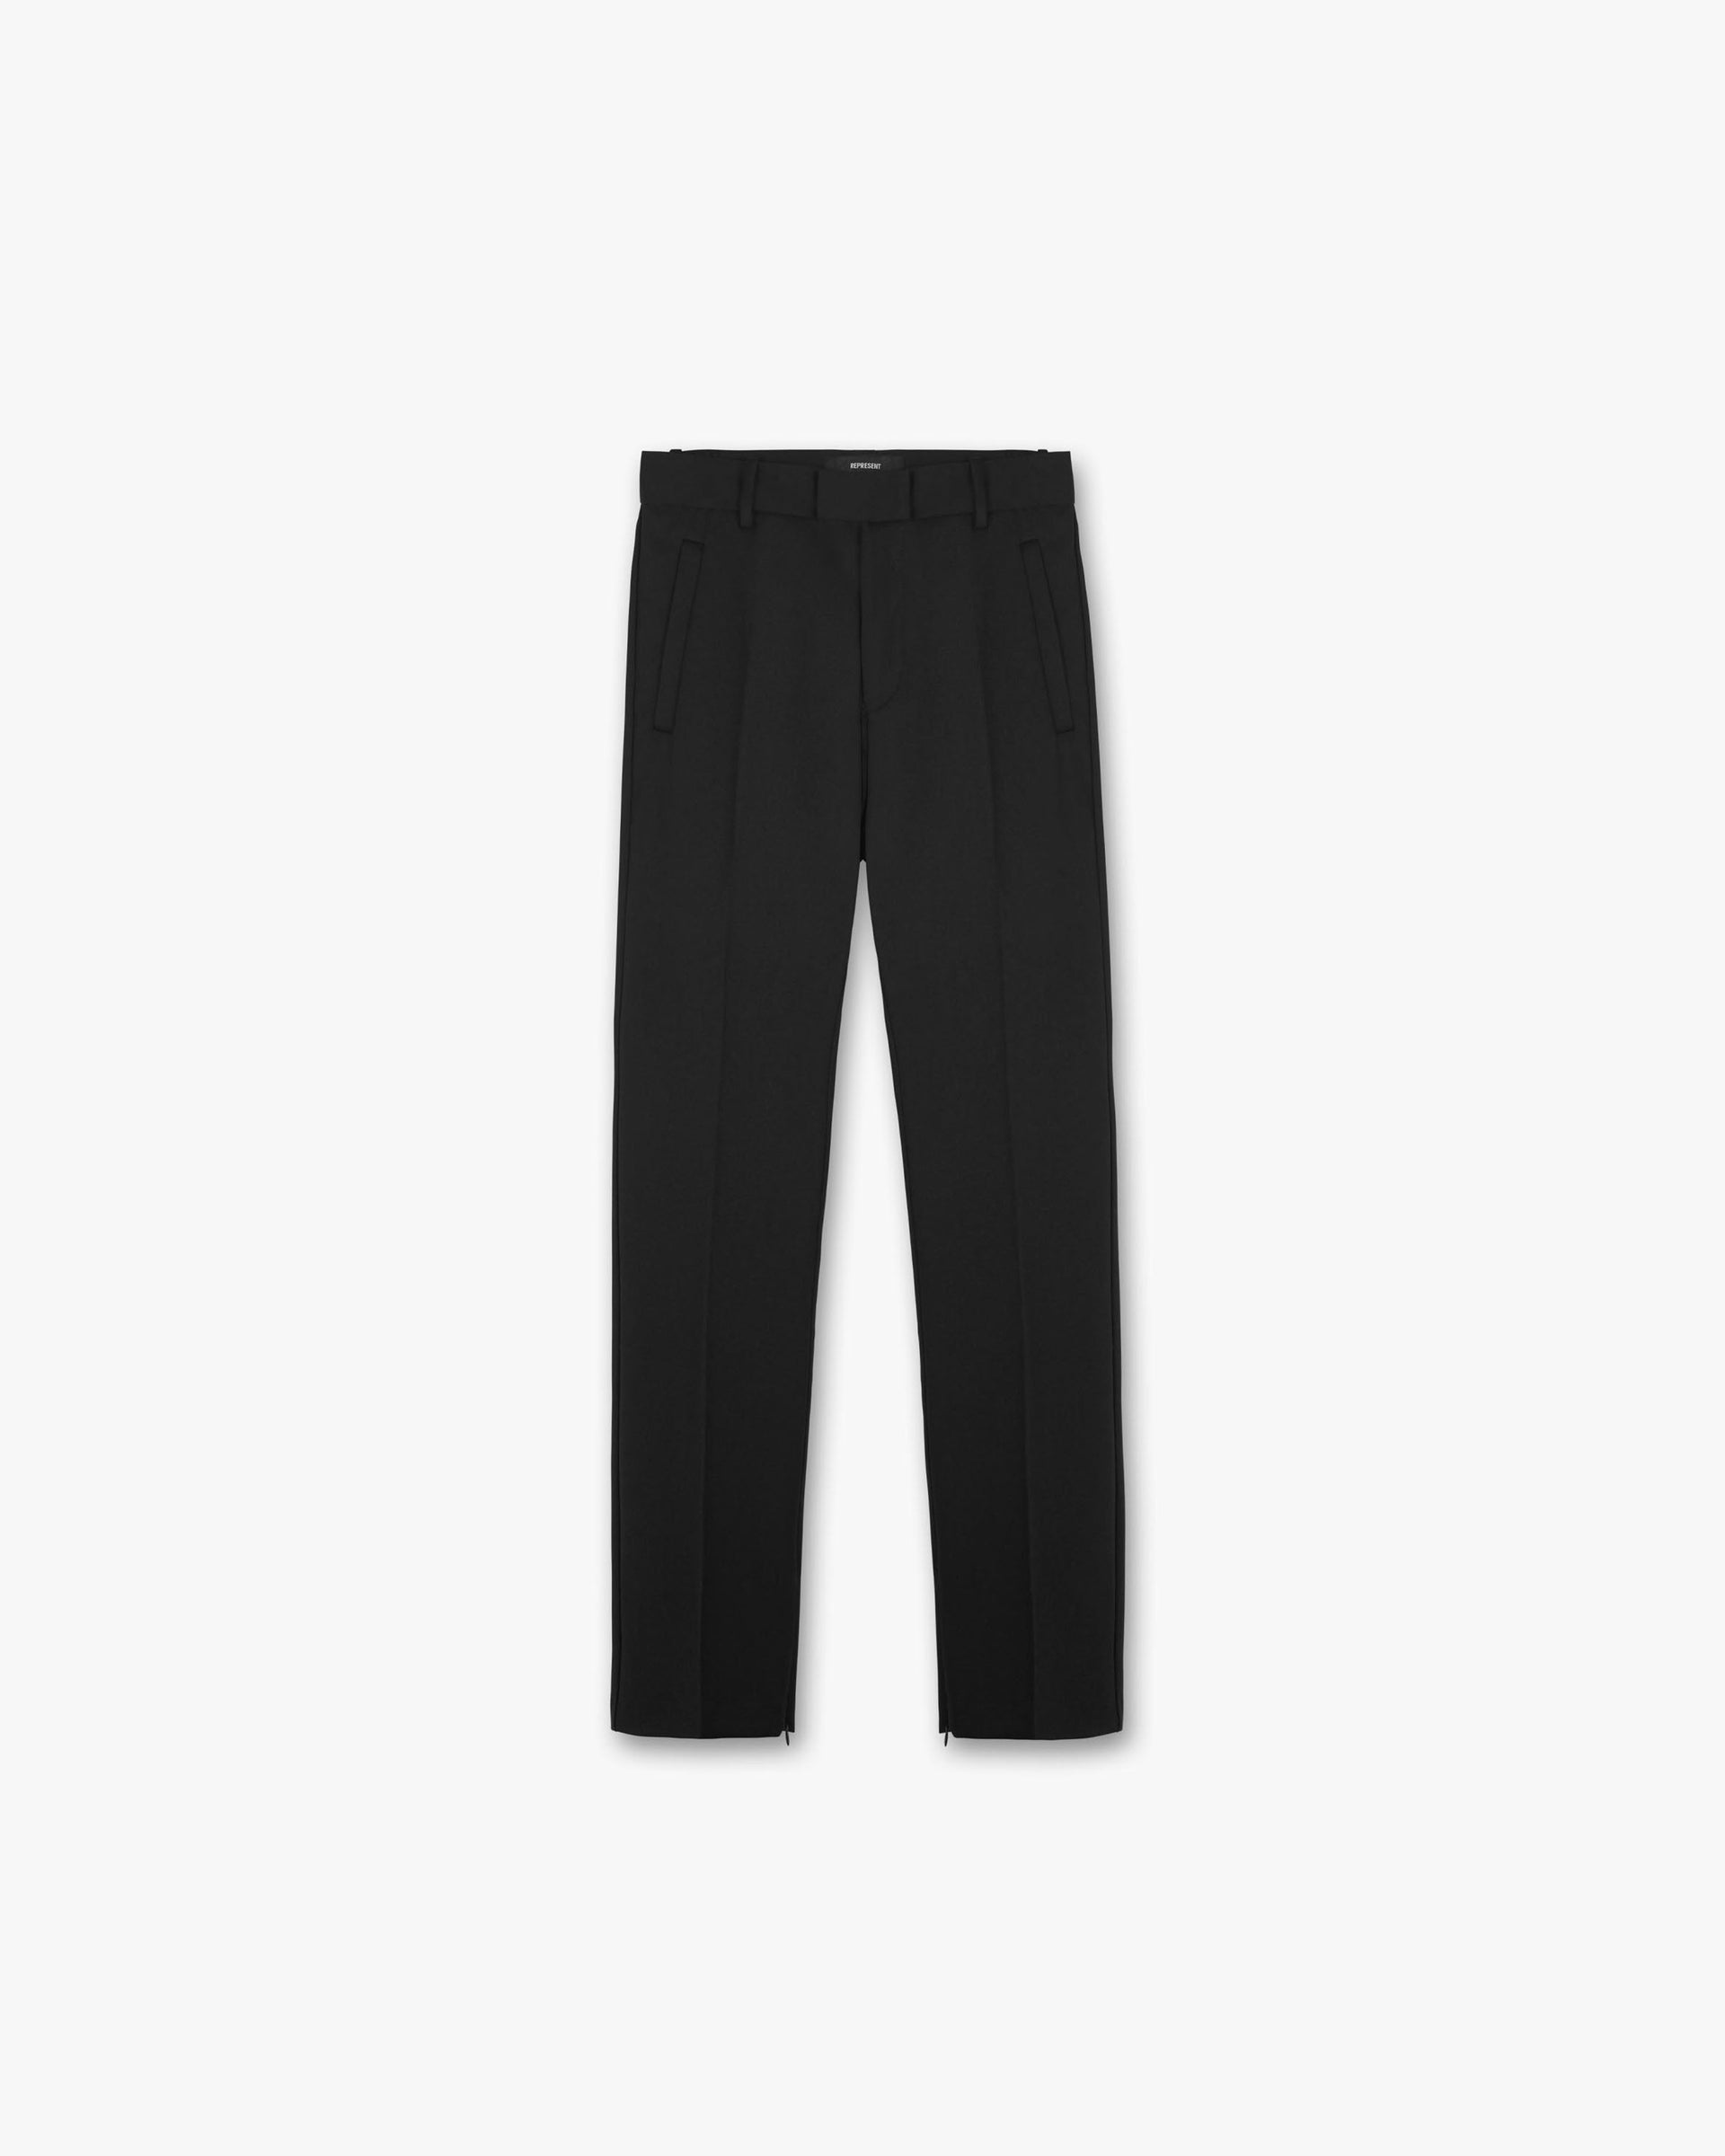 Tailored Pant | Black Pants FW21 | Represent Clo